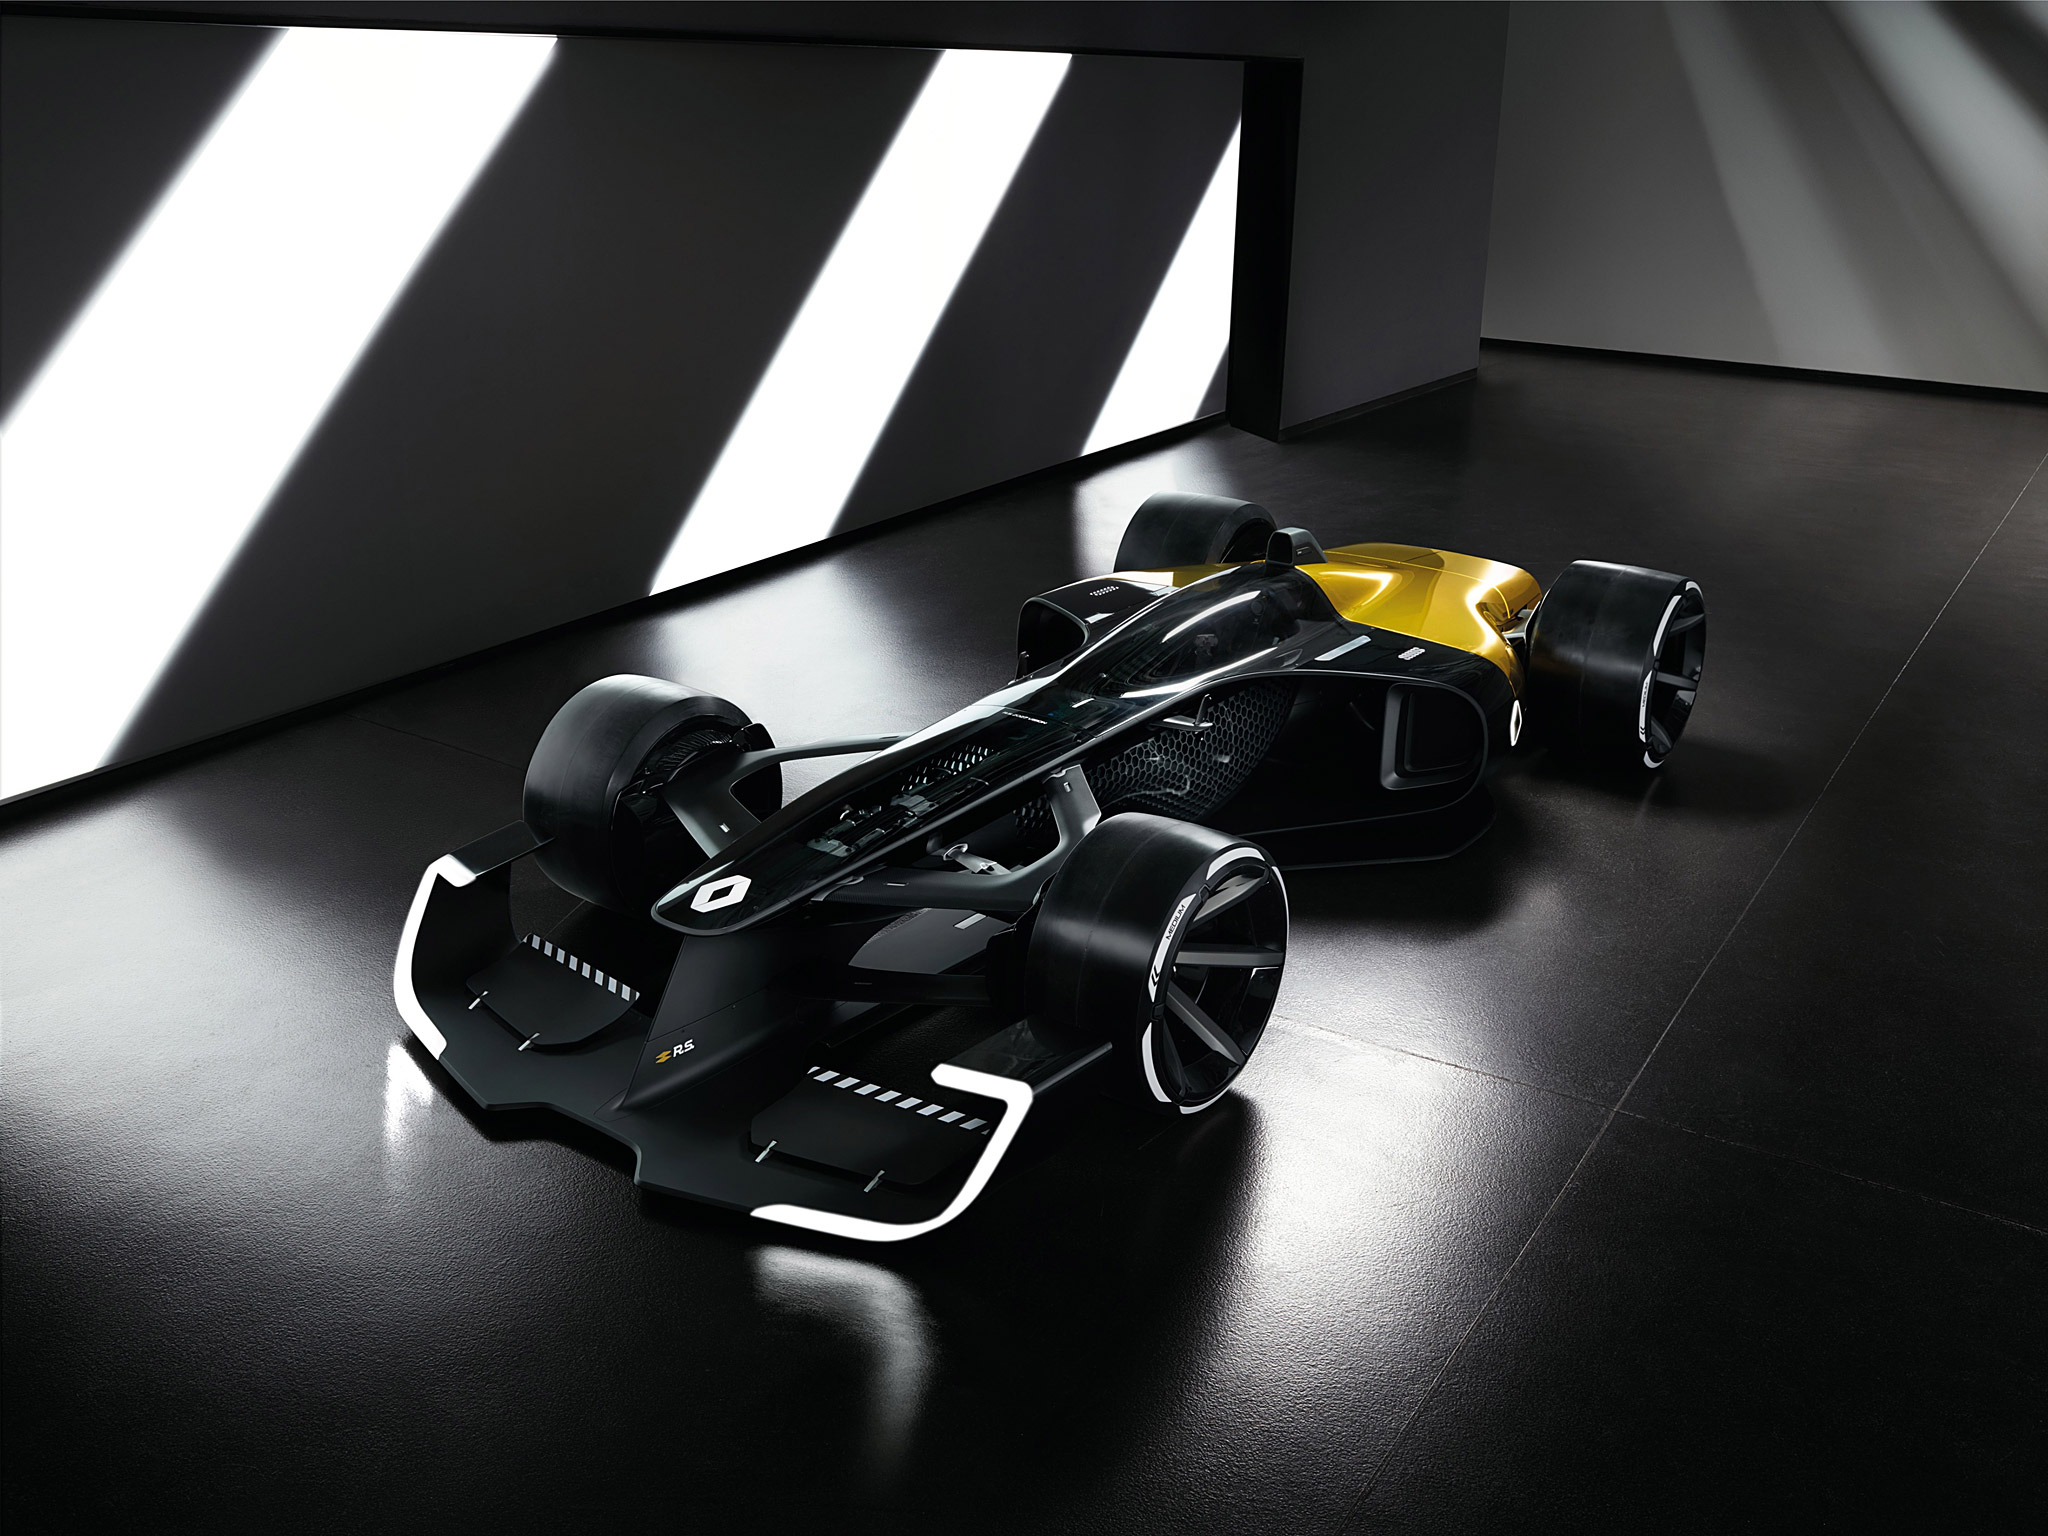  2017 Renault RS 2027 Vision Concept Wallpaper.